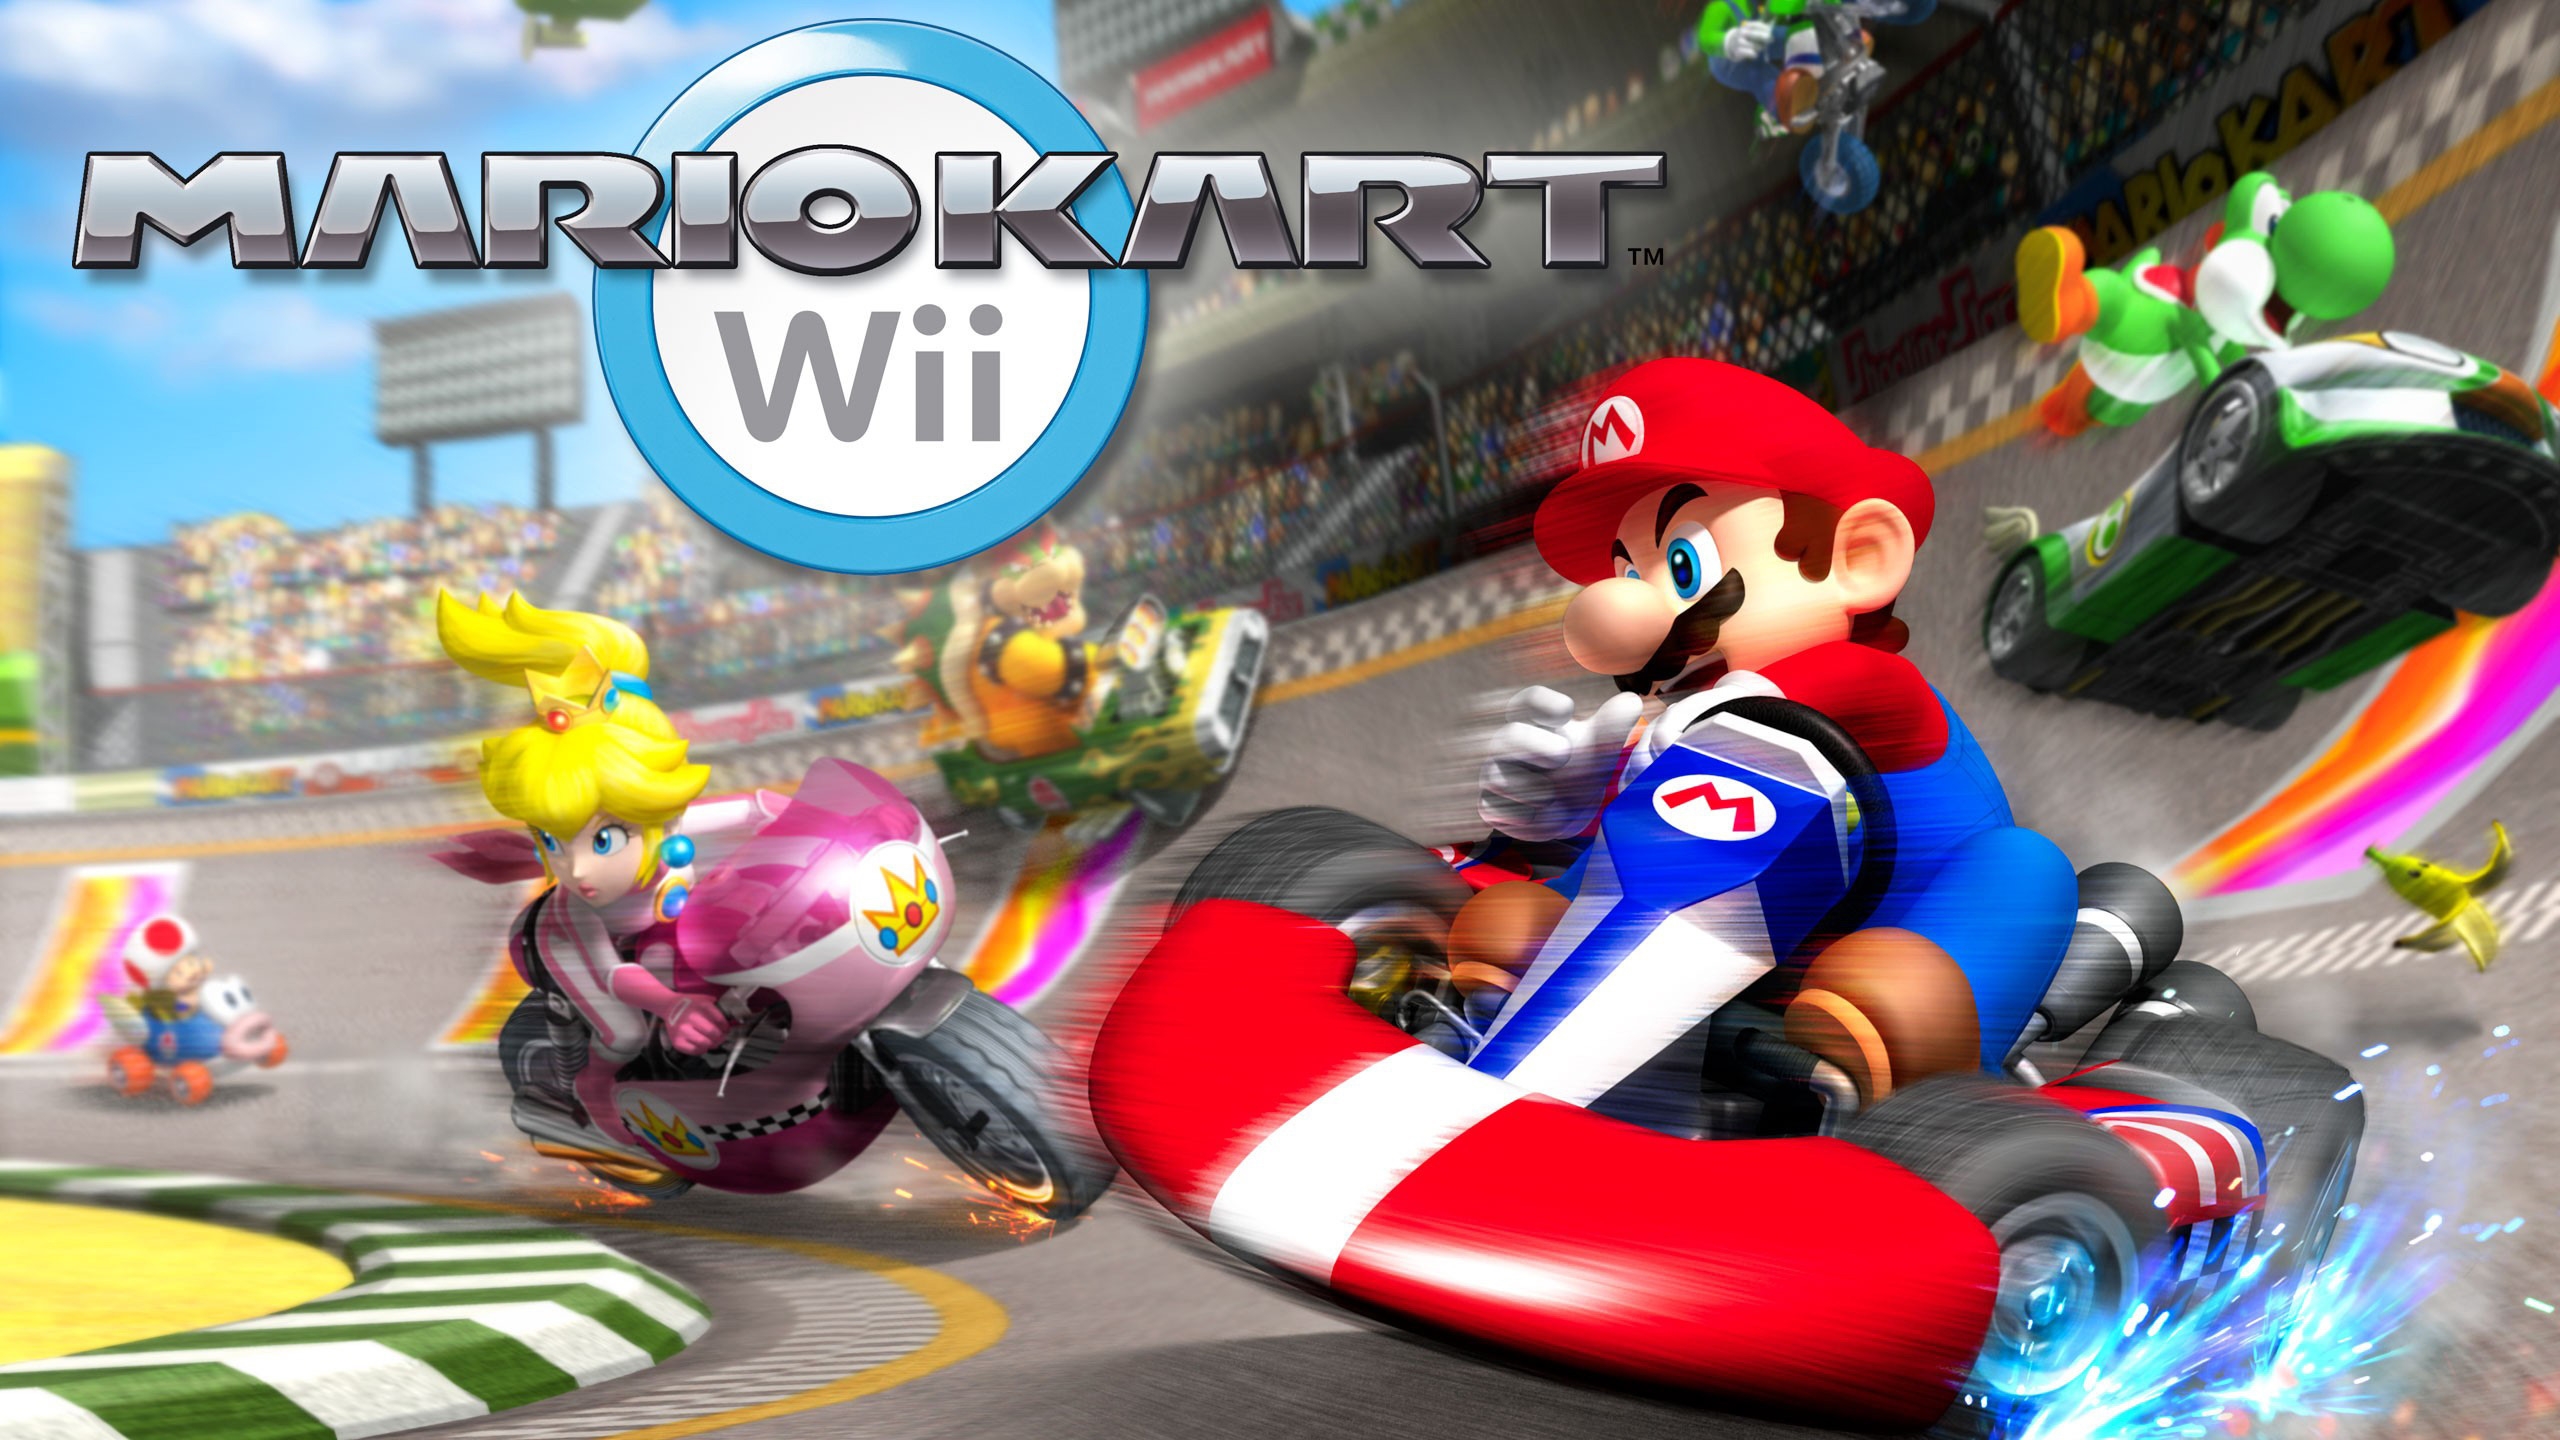 Mario Kart Wii for 2560x1440 HDTV resolution